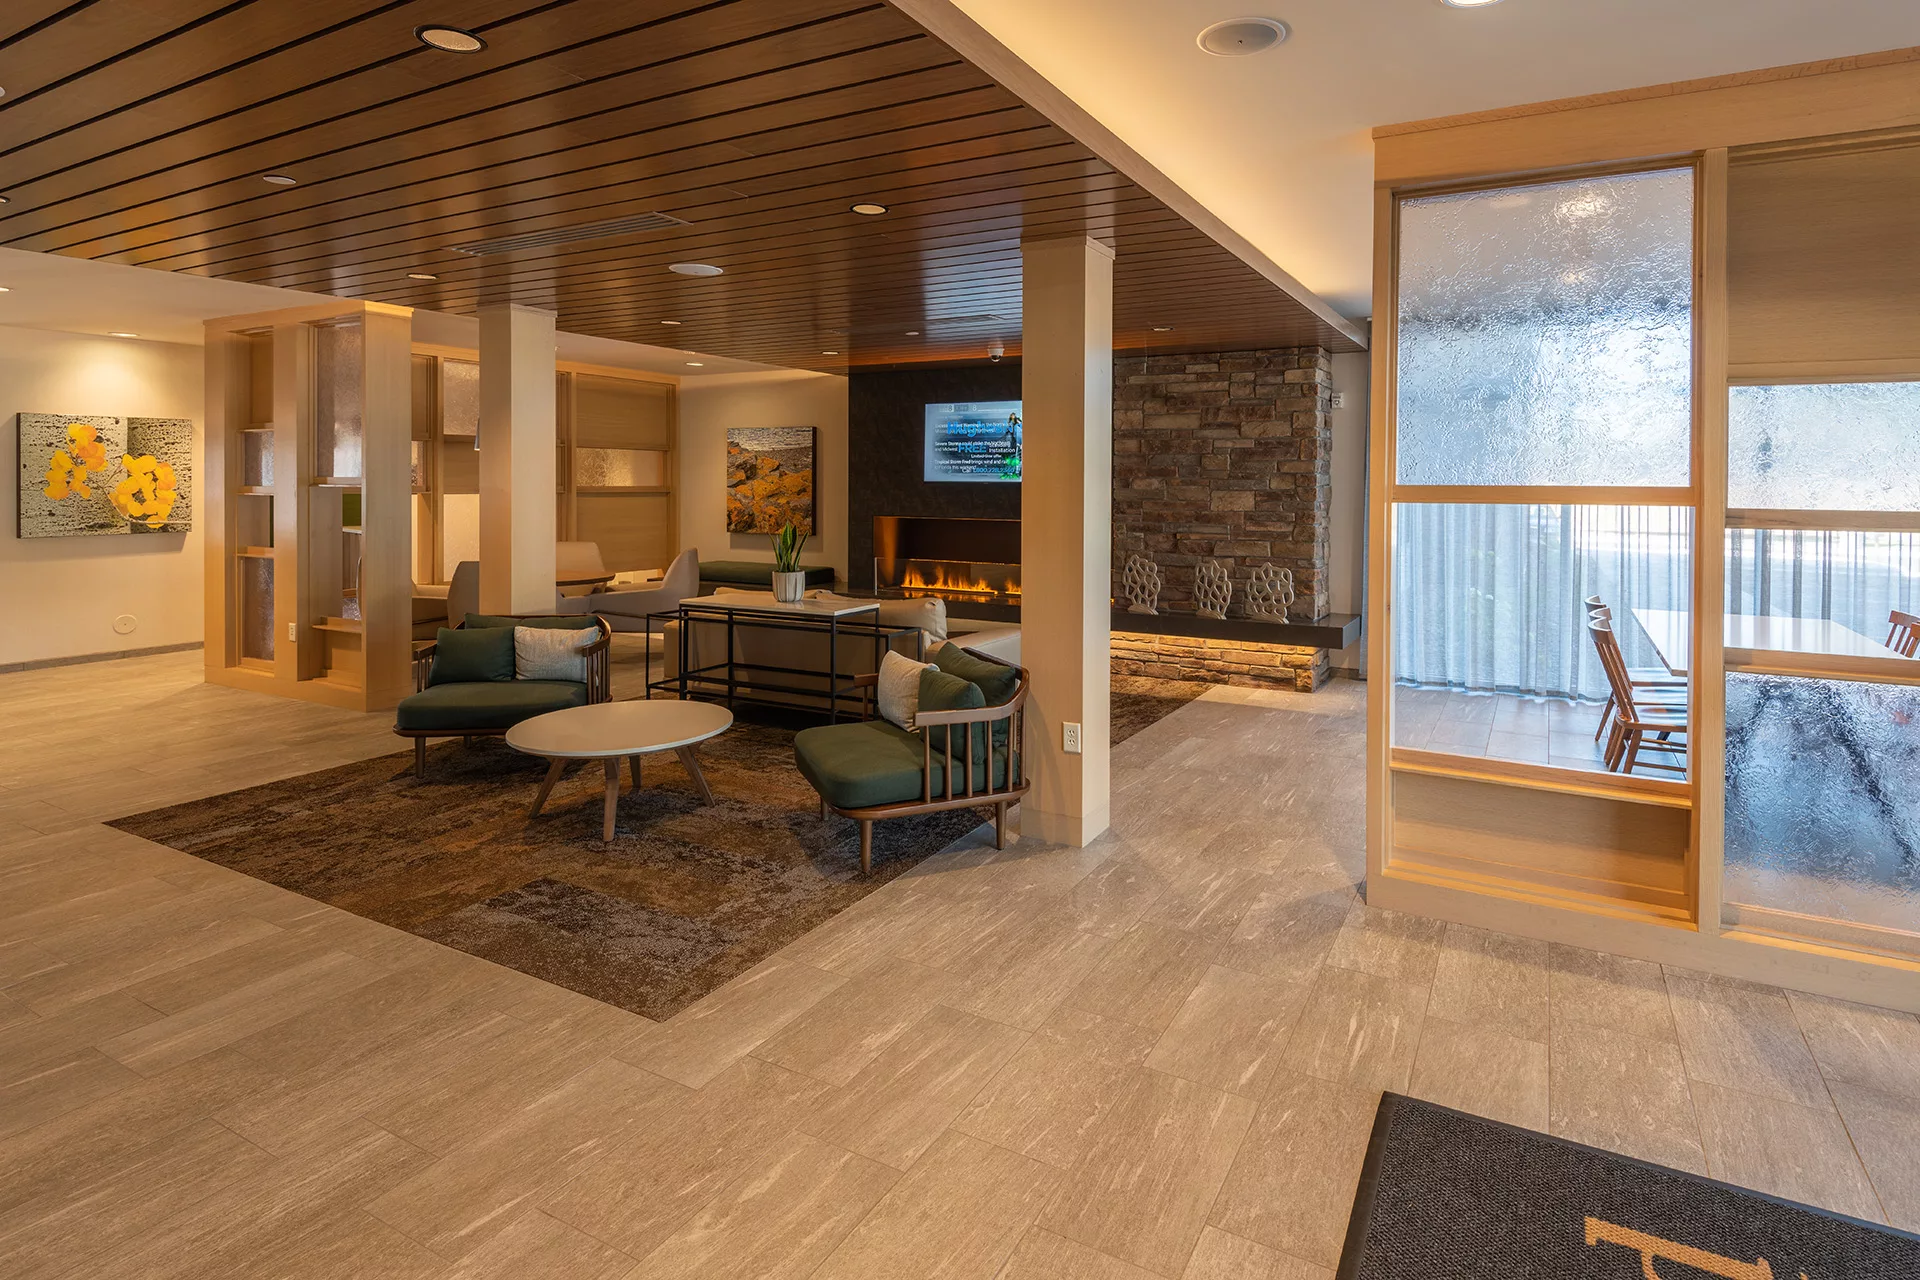 Fairfield Inn & Suites Duluth Mn Interior5